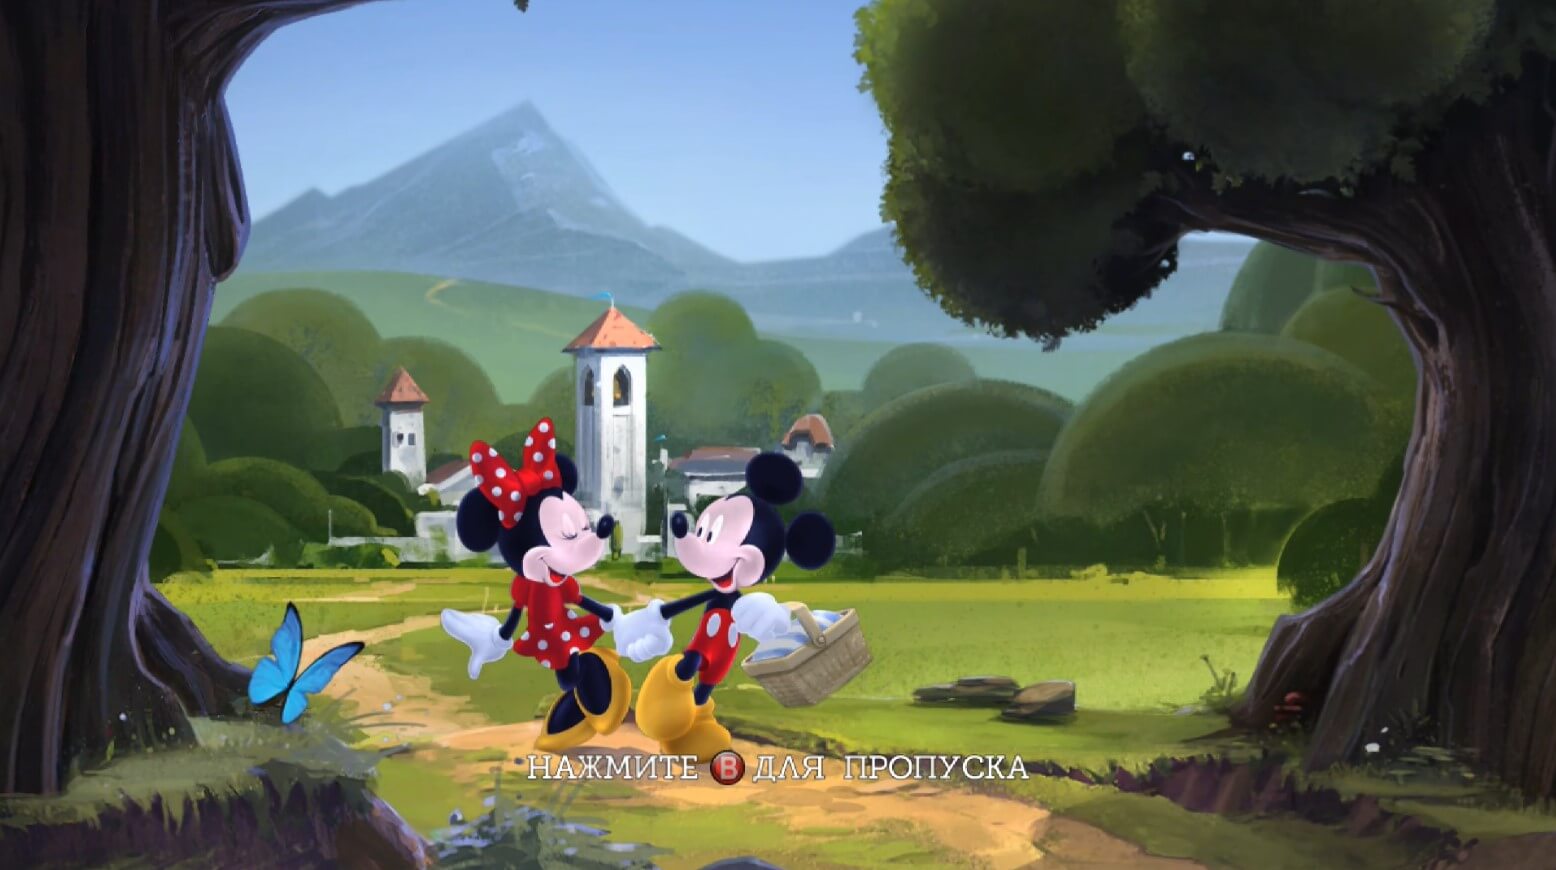 Игры illusion 2013. Игра Mickey Mouse Castle of Illusion. Castle of Illusion starring Mickey Mouse. Castle of Illusion starring Mickey Mouse 2013. Игра Микки Маус замок иллюзий 2013.